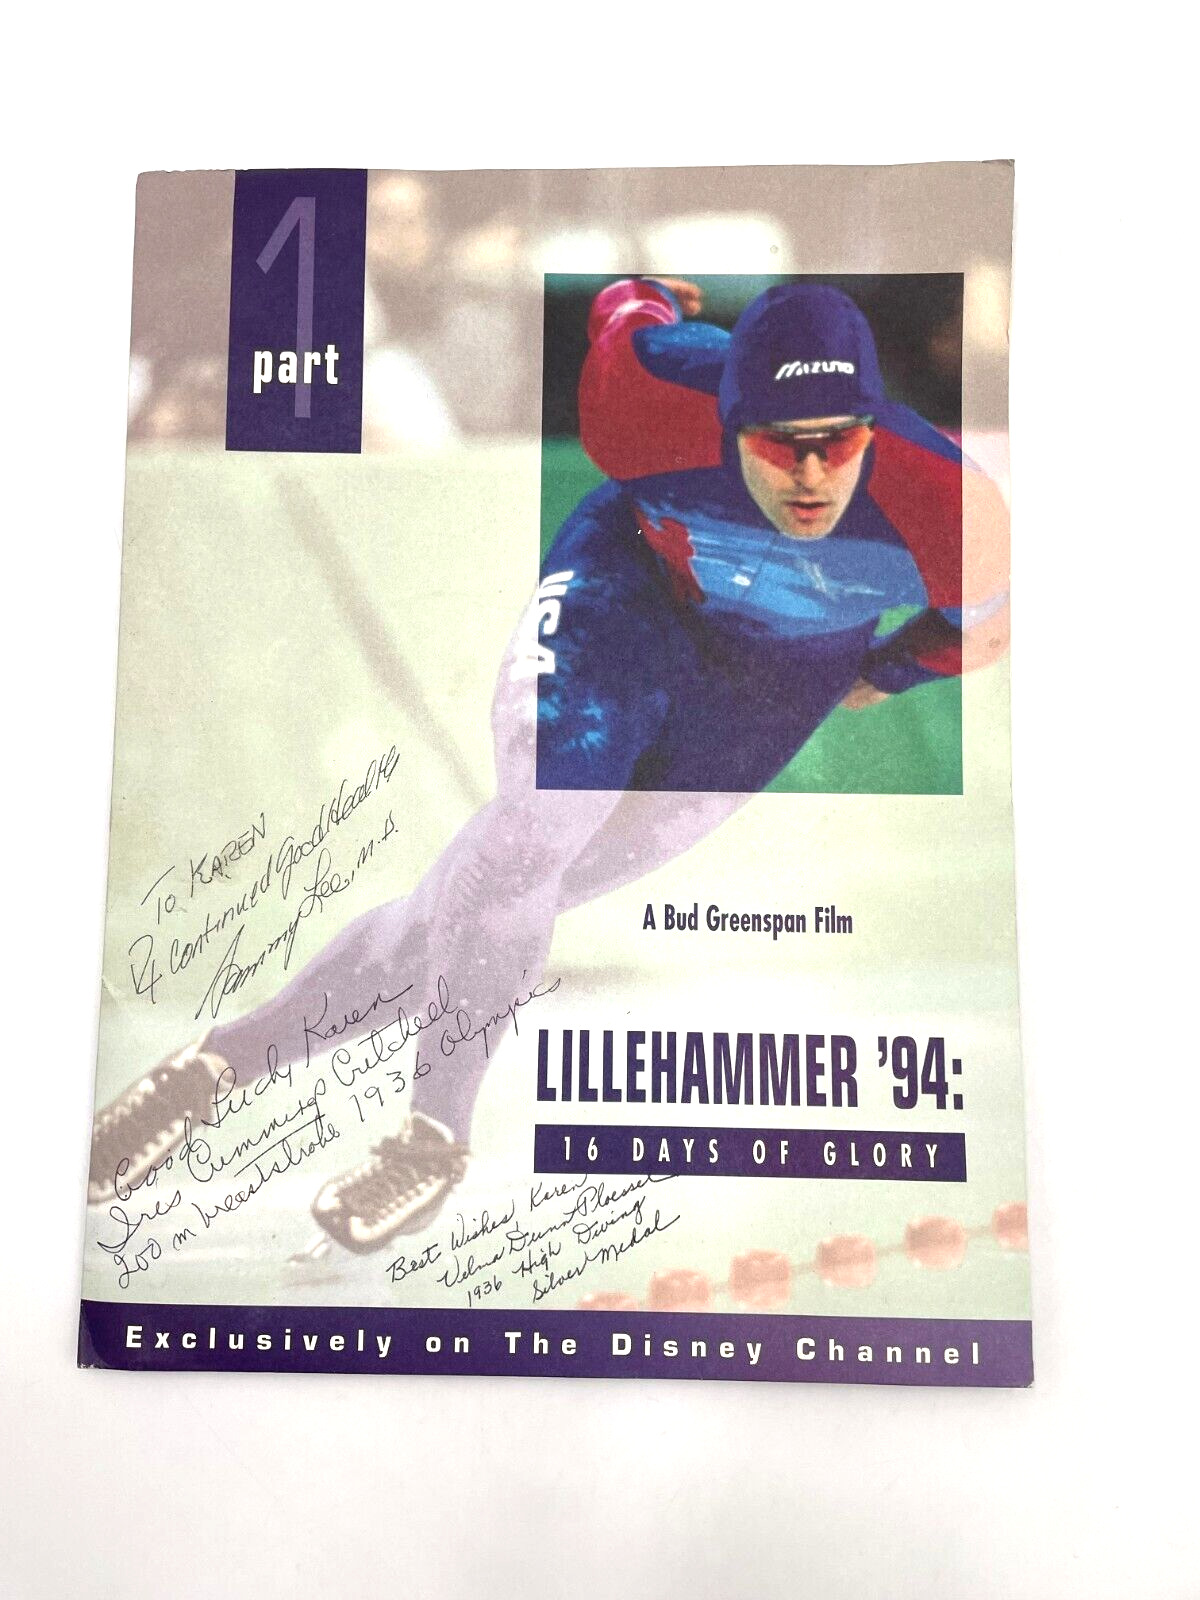 1994 Press Photo Ski jumper Jens Weissflog in Lillehammer '94: 16 Days of Glory.